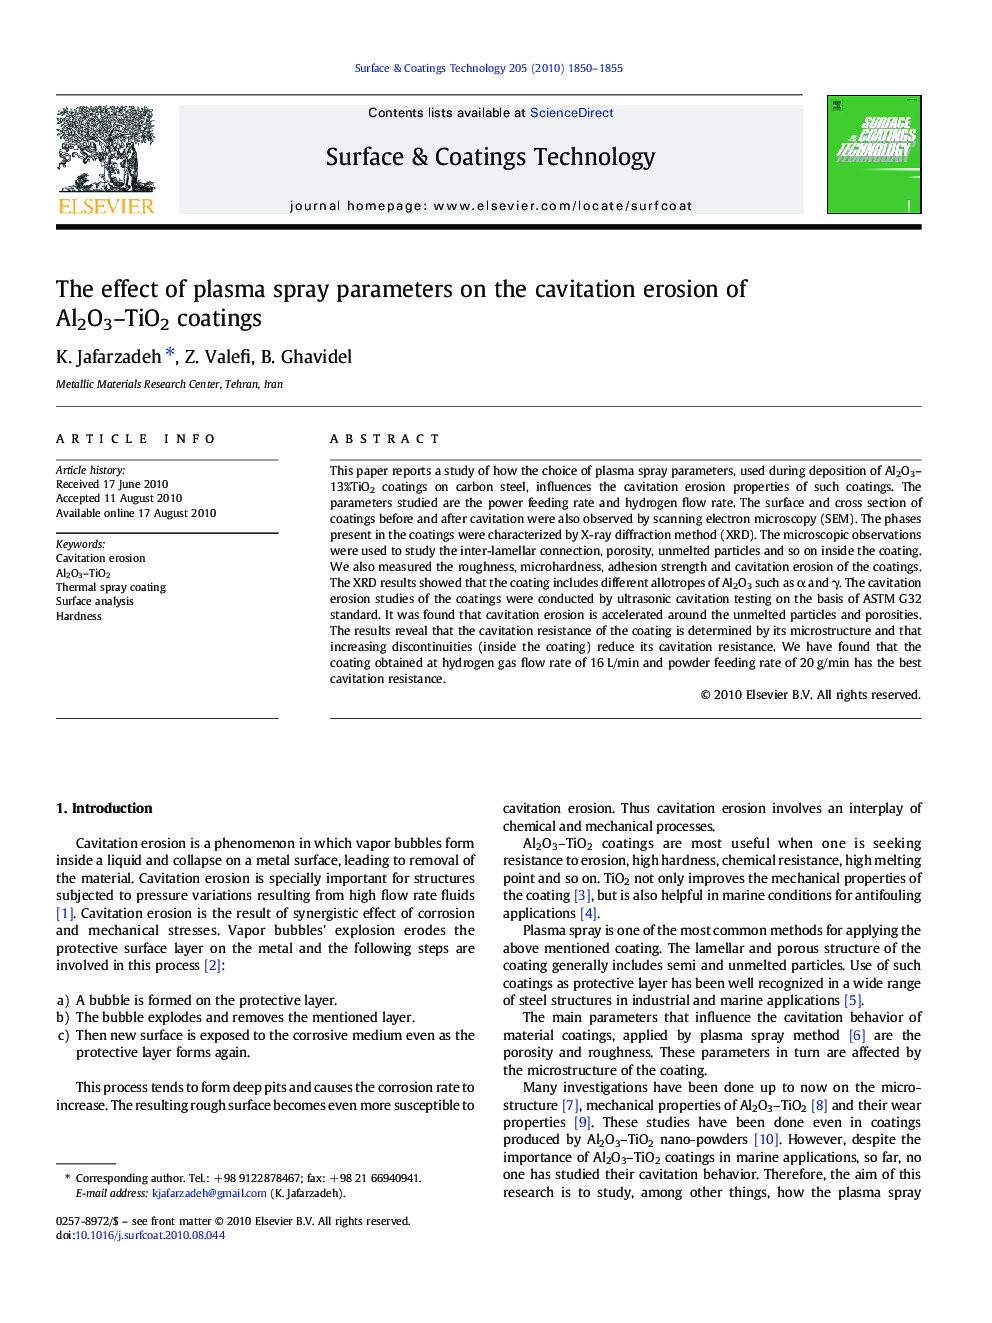 The effect of plasma spray parameters on the cavitation erosion of Al2O3-TiO2 coatings